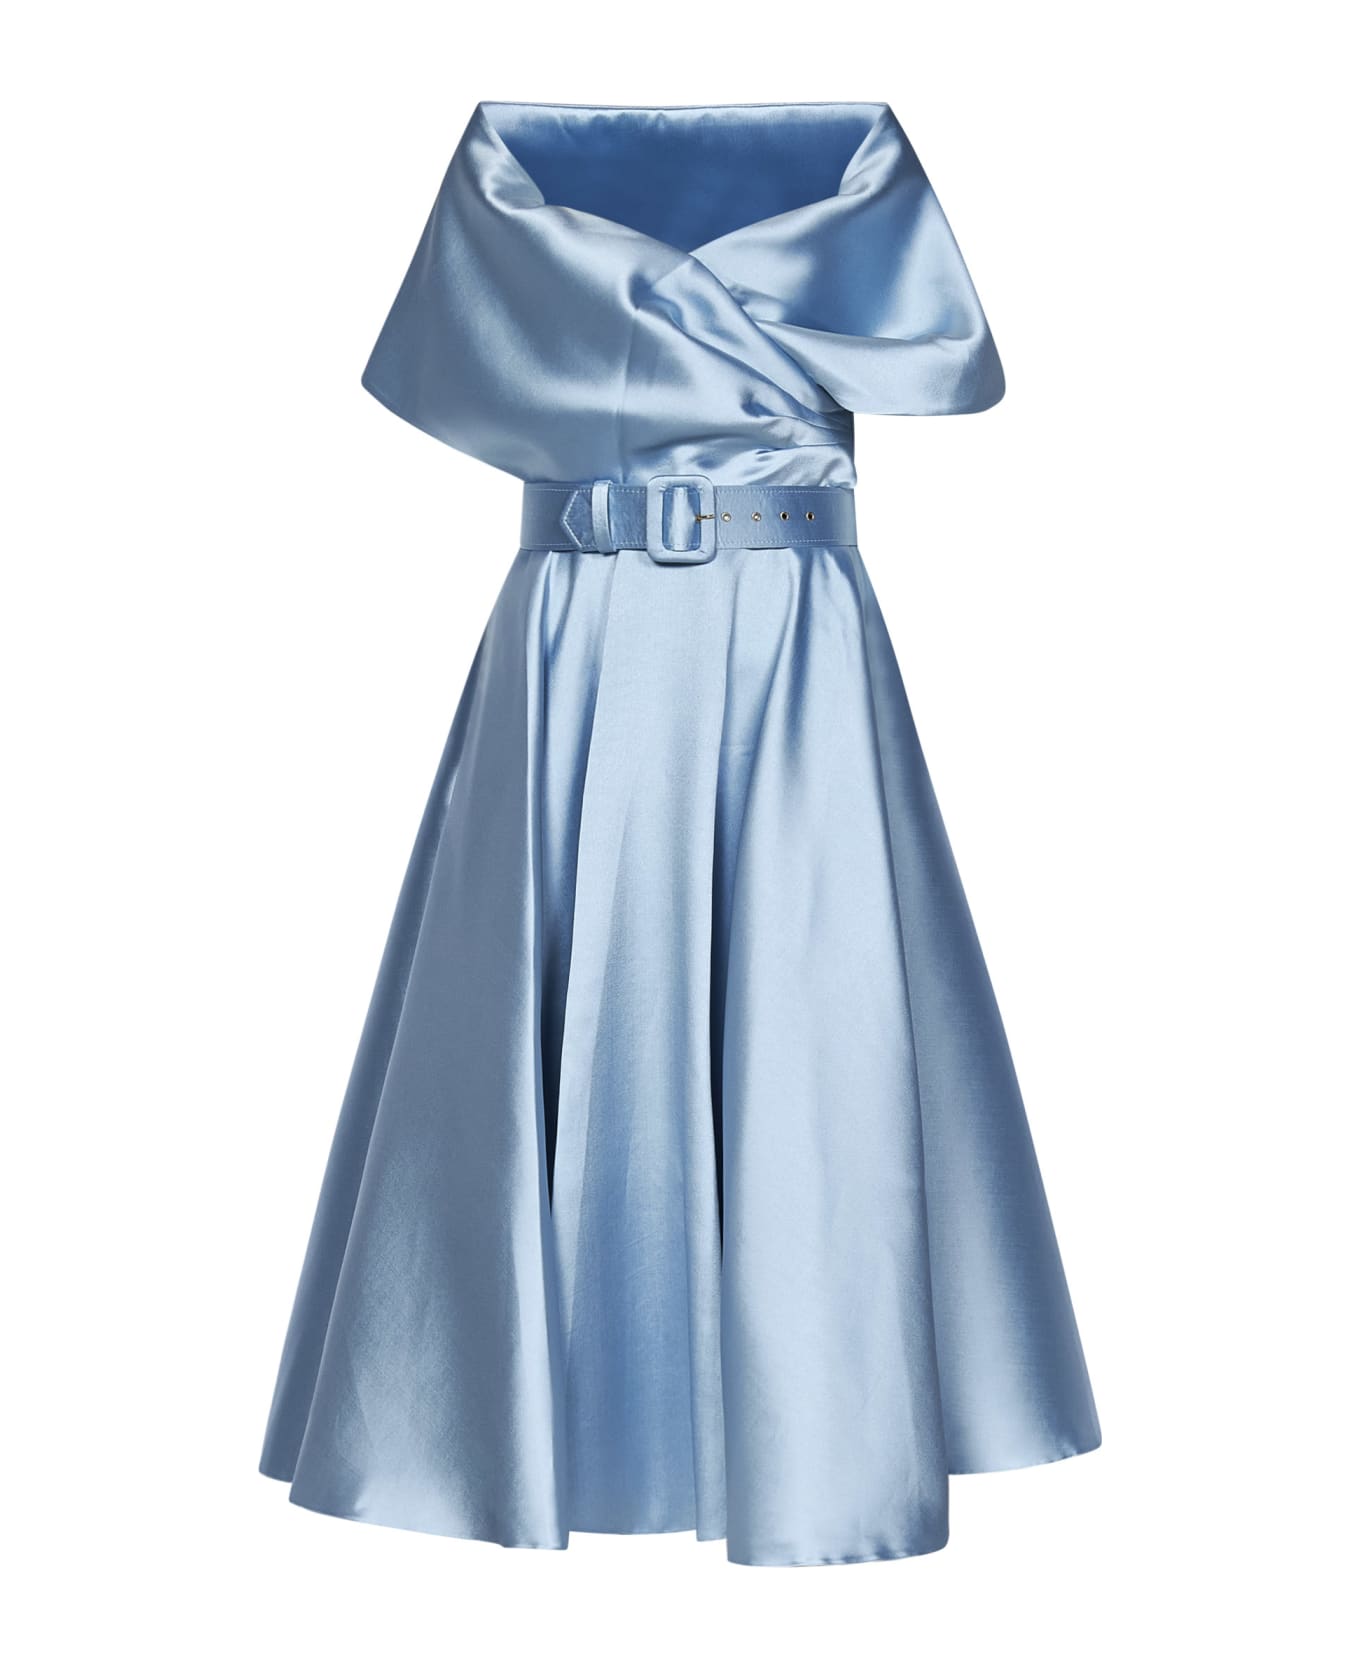 Rhea Costa Rima Dress - Light blue